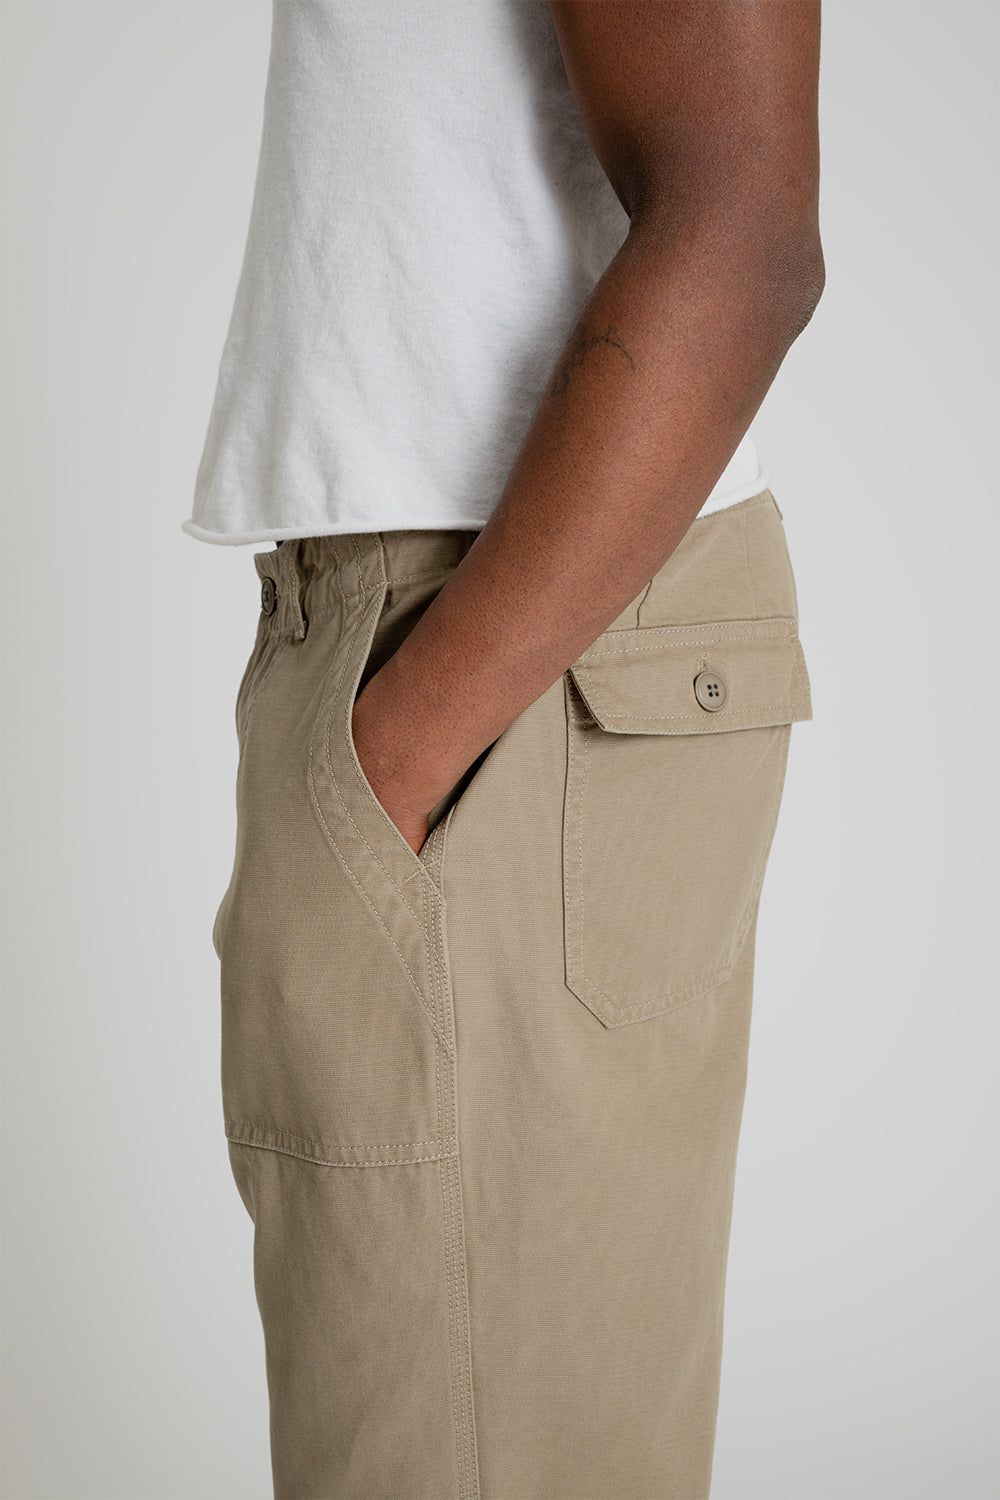 Frizmworks Jungle Cloth Fatigue Pants Khaki Beige Detail 04